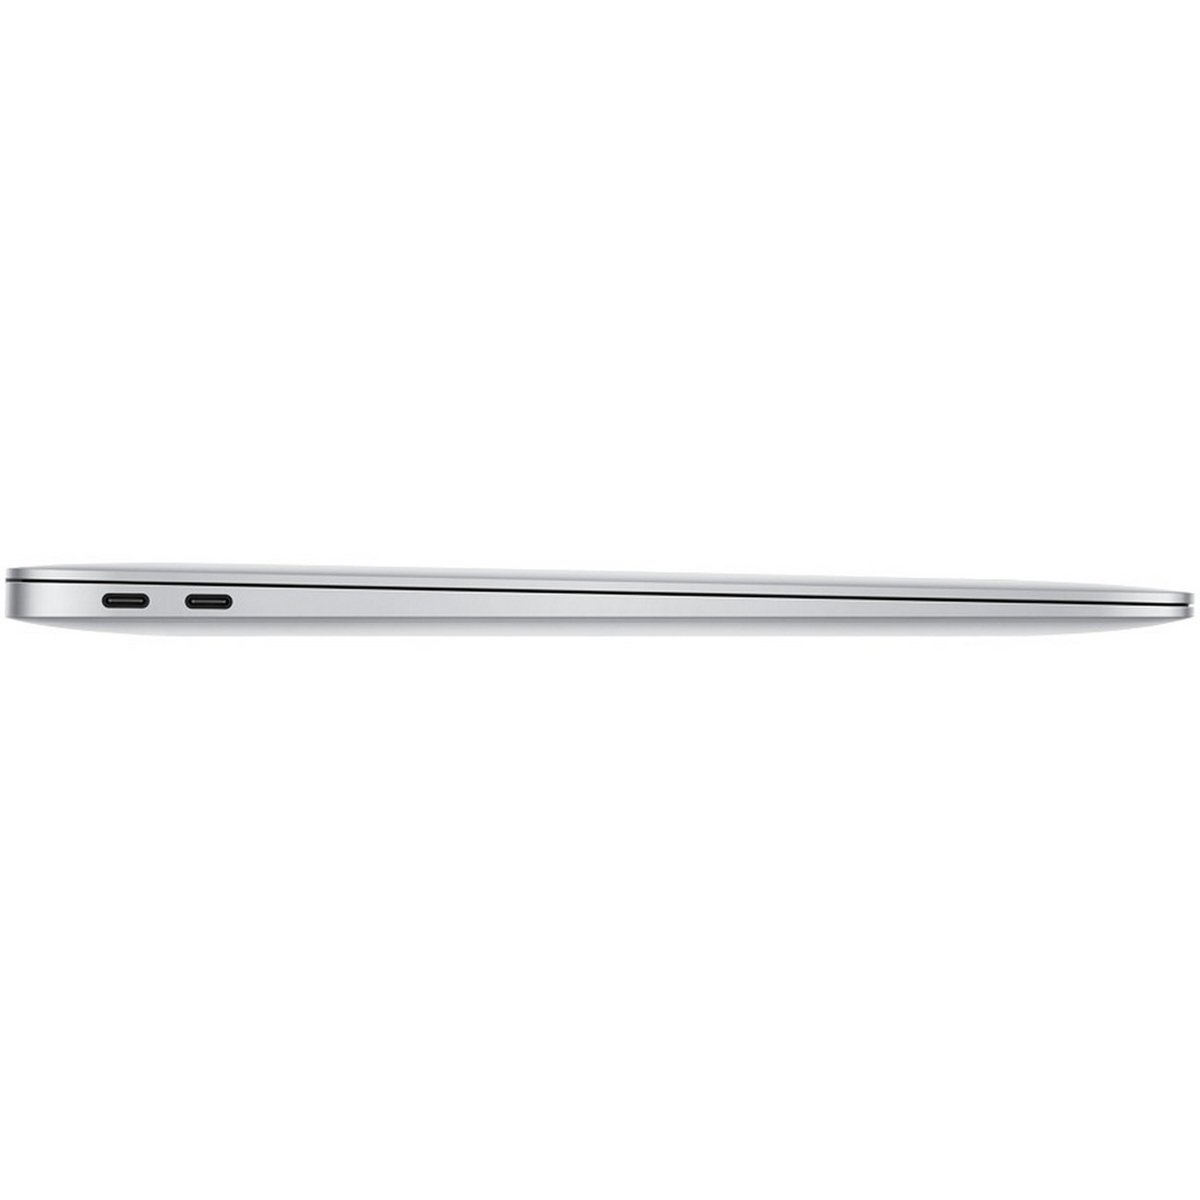 Apple MacBook Air  MREA2 Core i5 Silver